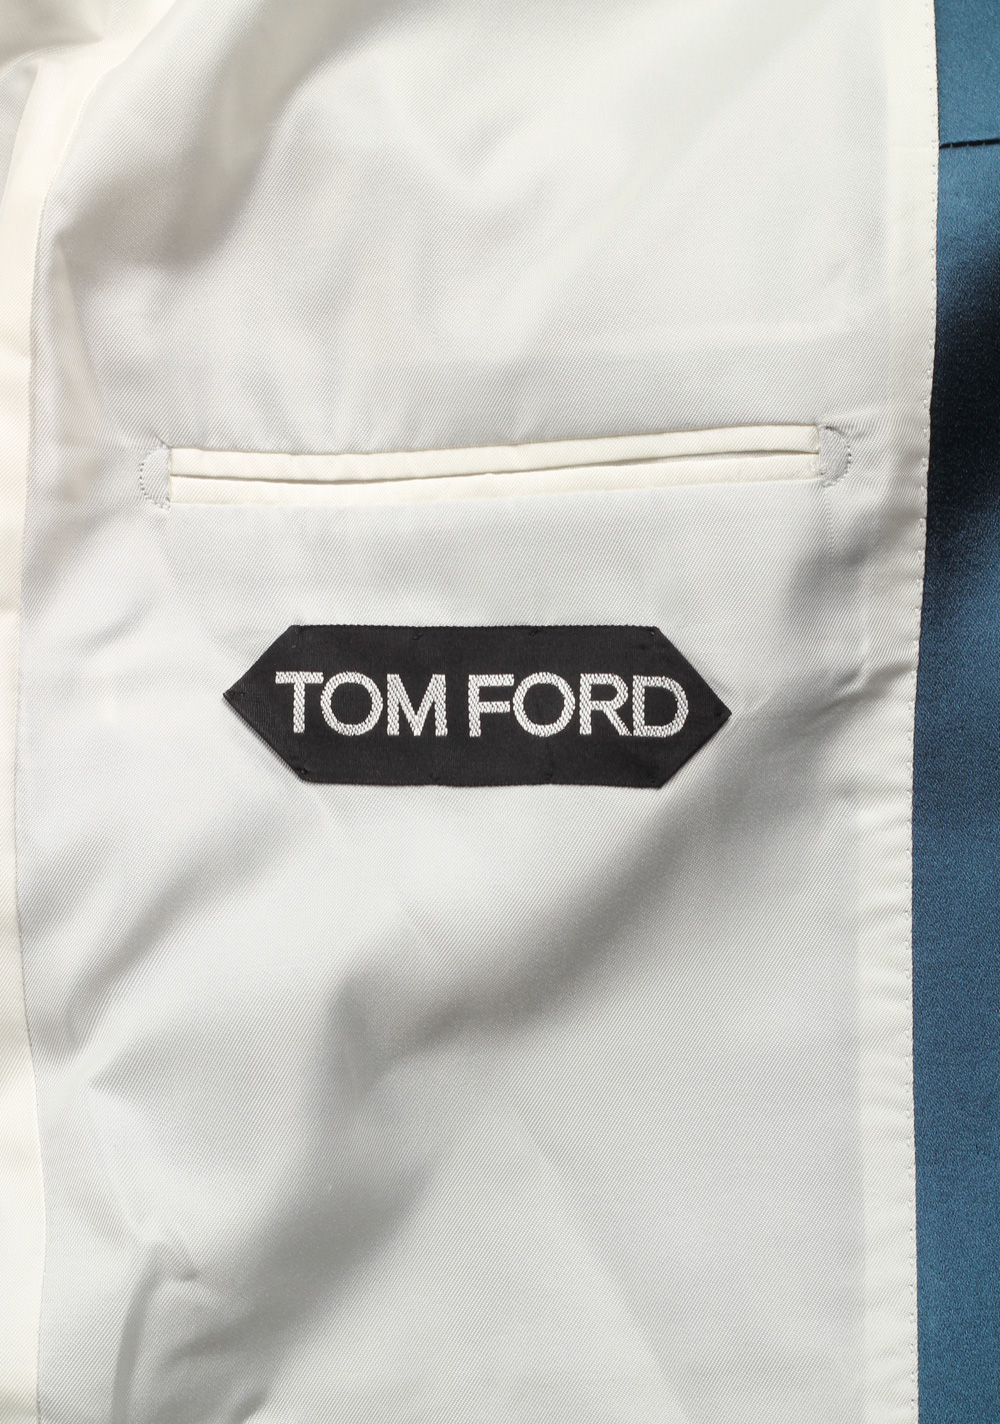 TOM FORD Shelton Shawl Collar Velvet Teal Sport Coat Tuxedo Dinner Jacket Size Size 52 / 42R U.S. | Costume Limité